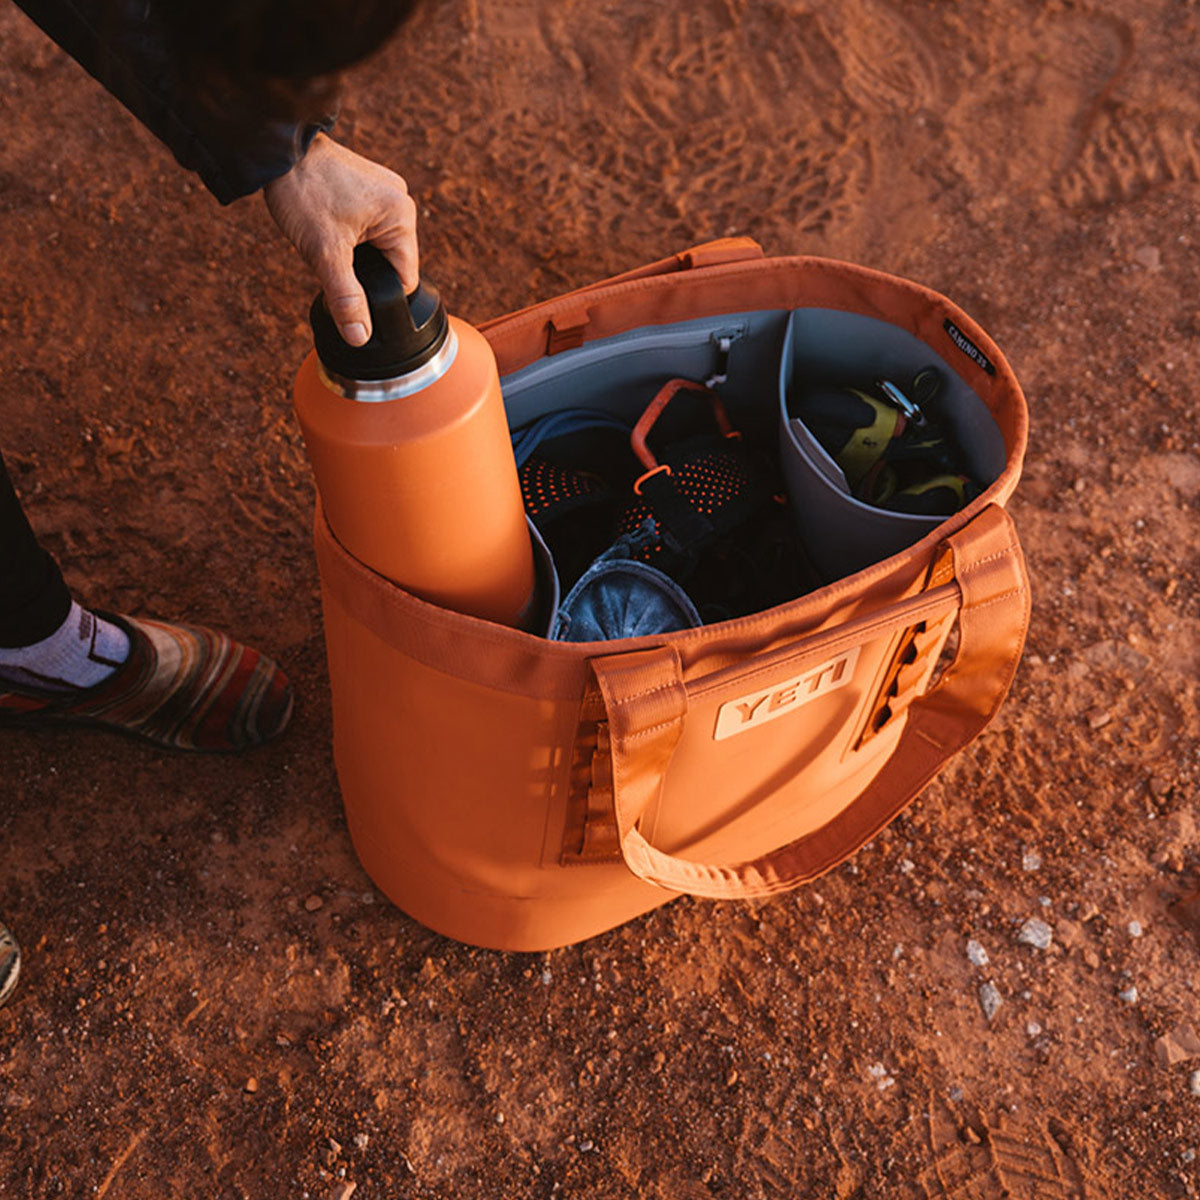 YETI- Camino Carryall 35 Tote Bag High Desert Clay